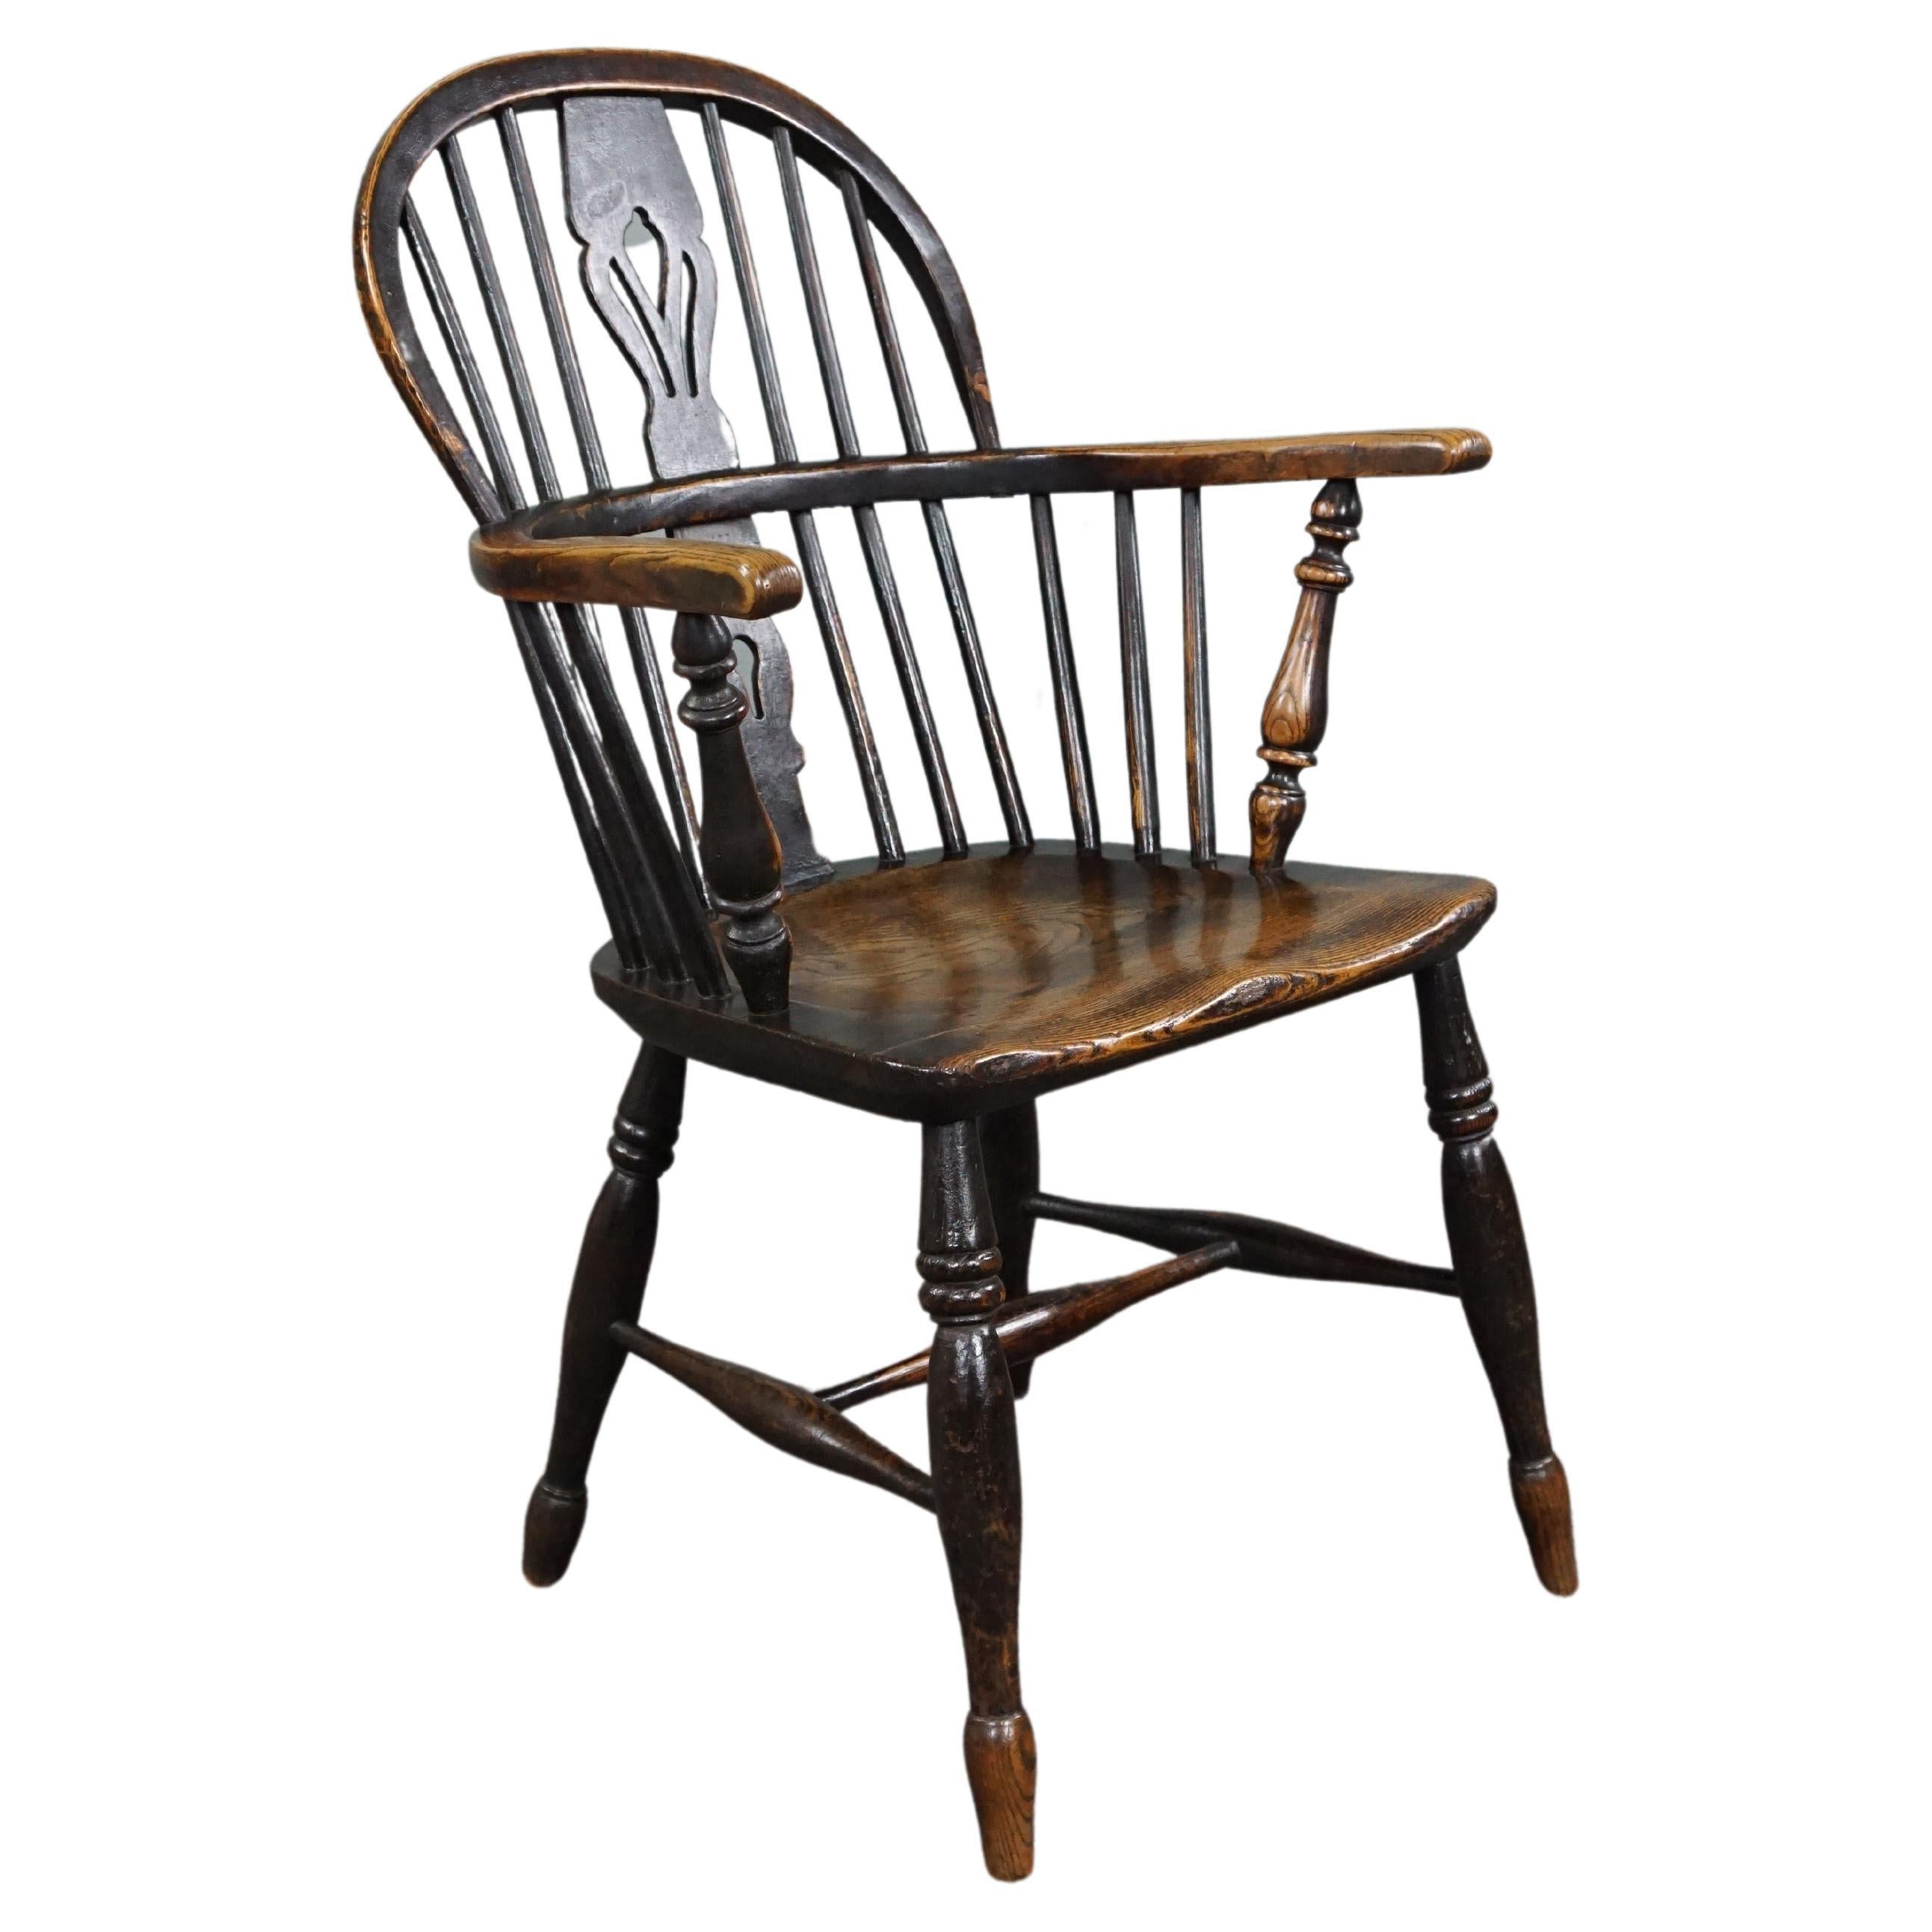 Atemberaubender antiker englischer Windsor-Sessel/Sessel mit niedriger Rückenlehne, 18. Jahrhundert